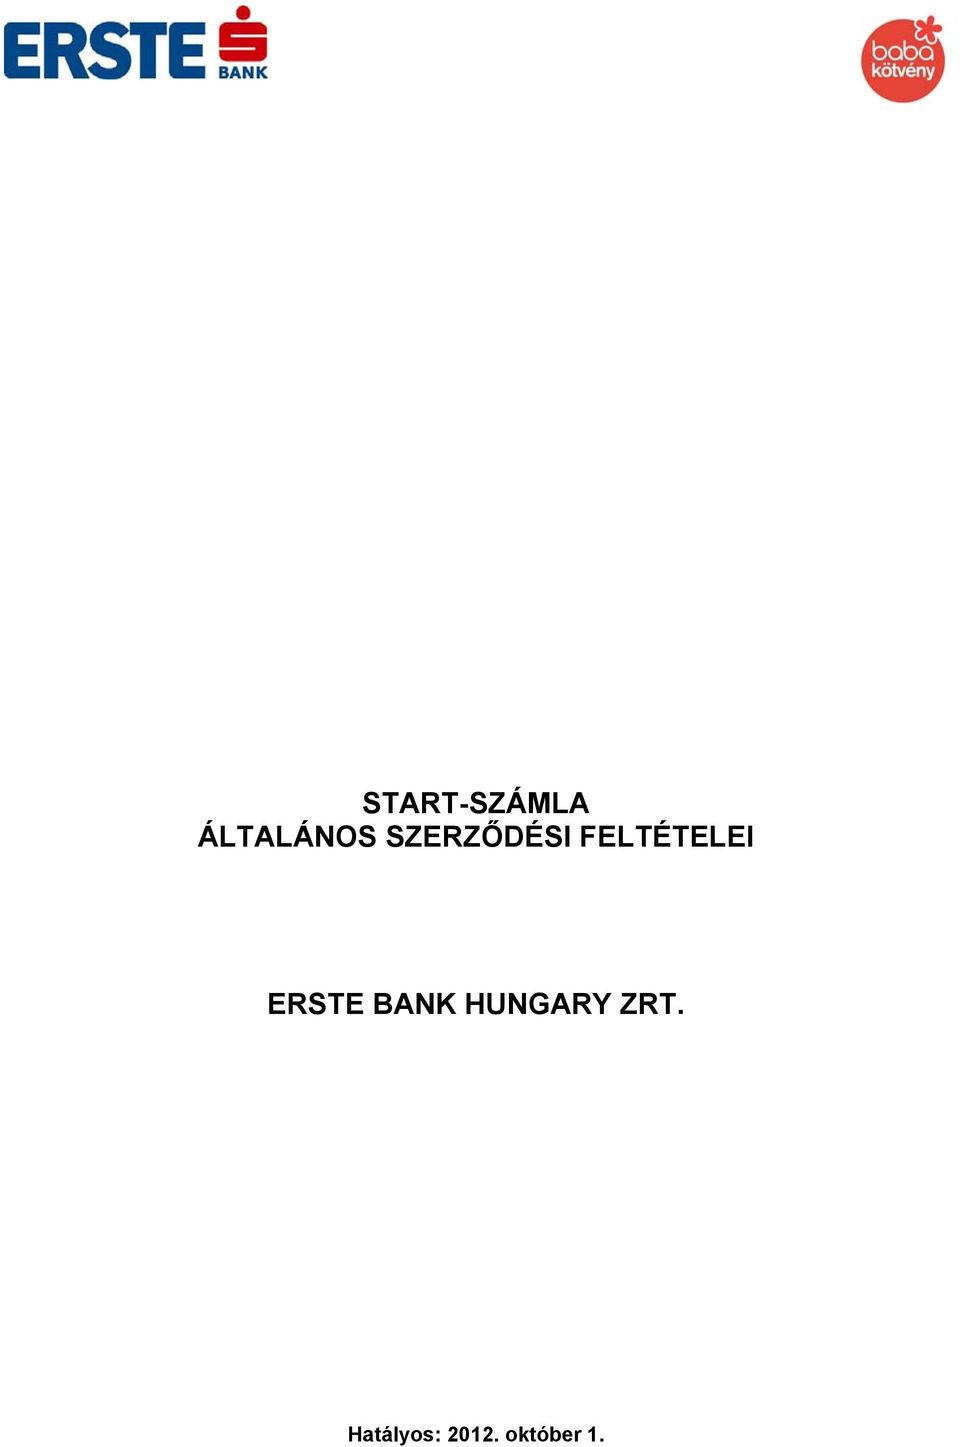 ERSTE BANK HUNGARY ZRT.